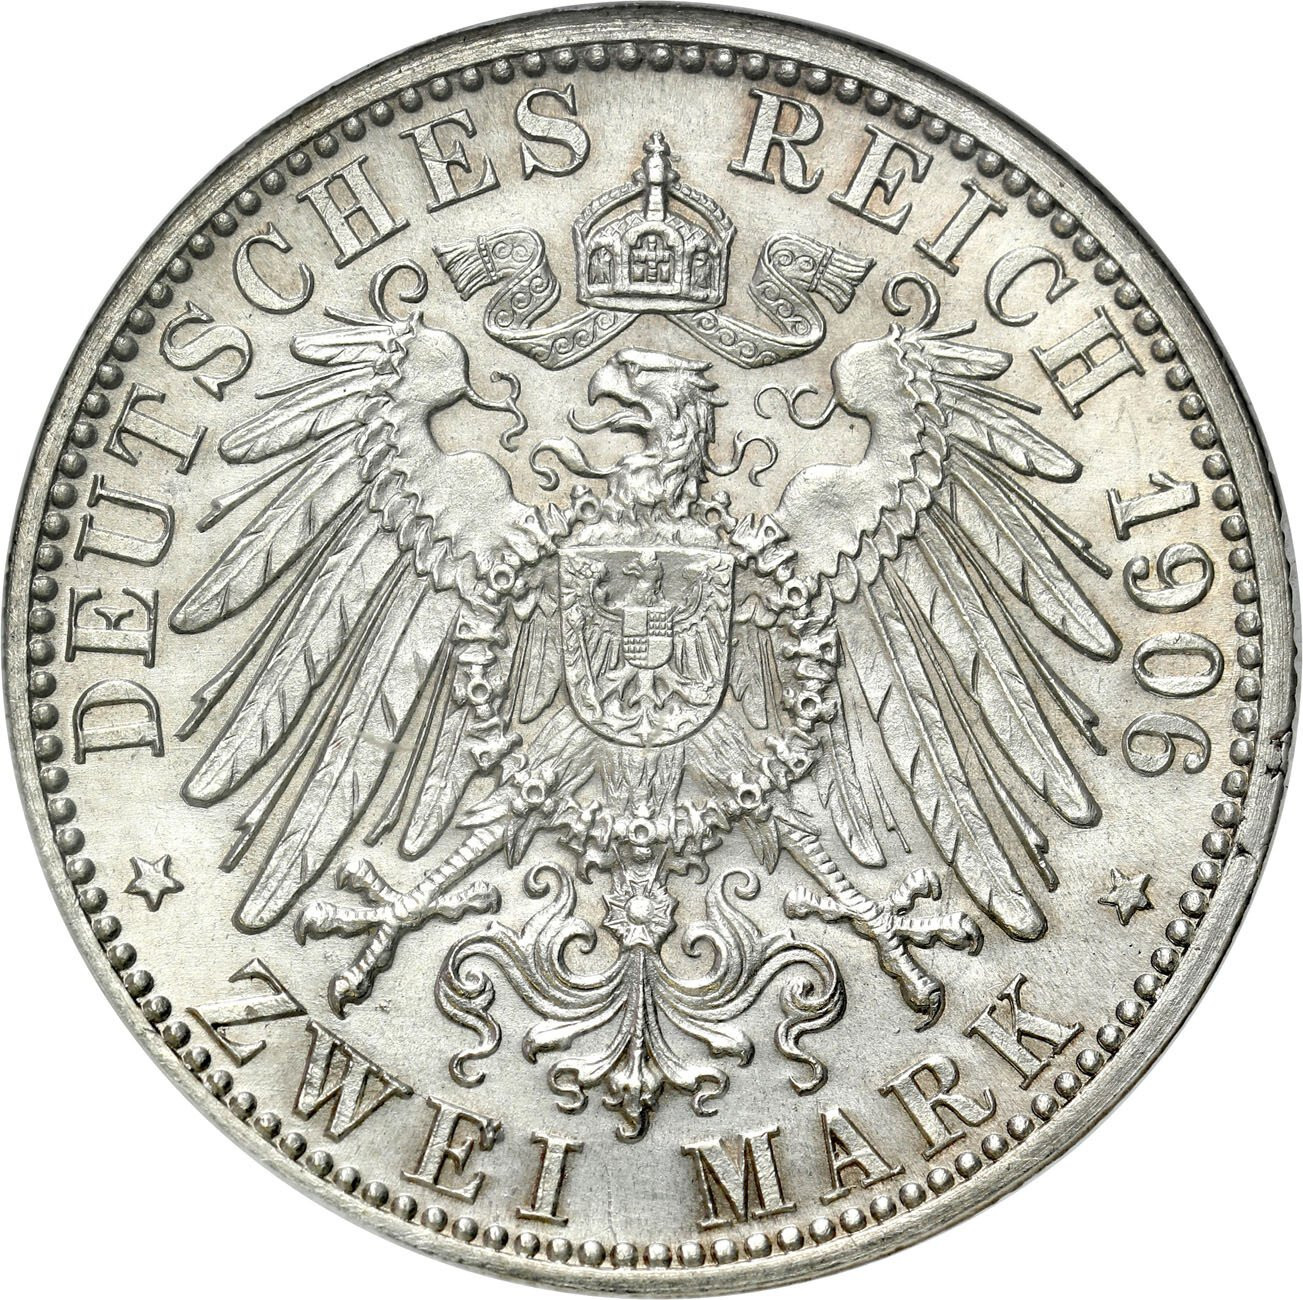 Niemcy, Badenia. 2 marki 1906, Karlsruhe